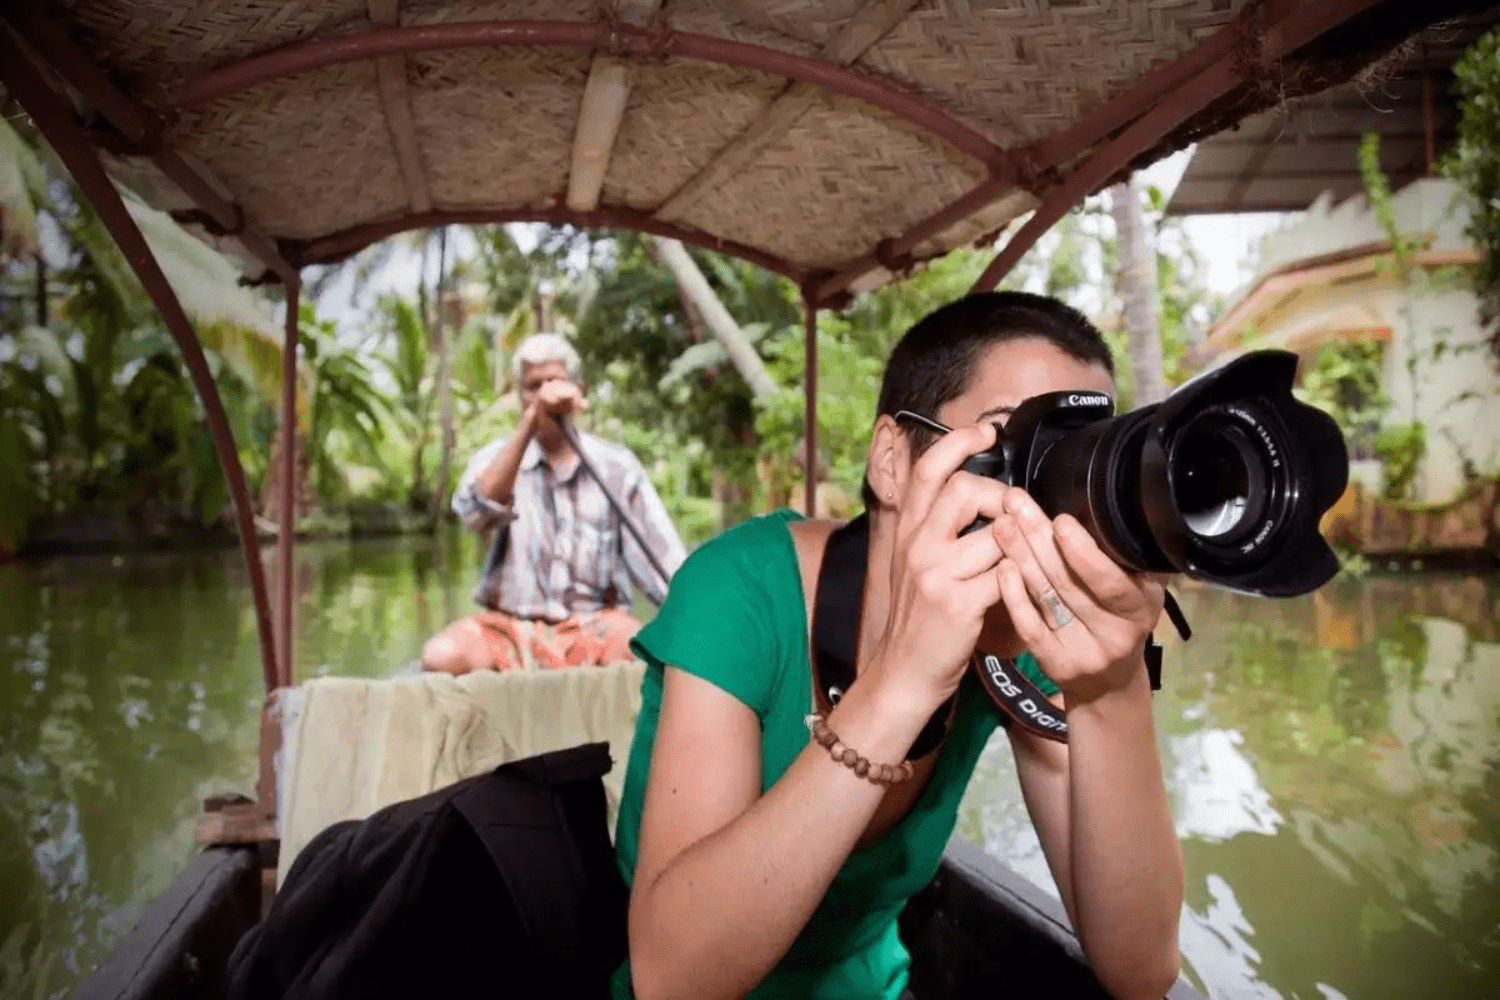 carry-camera-for-kerala-visit